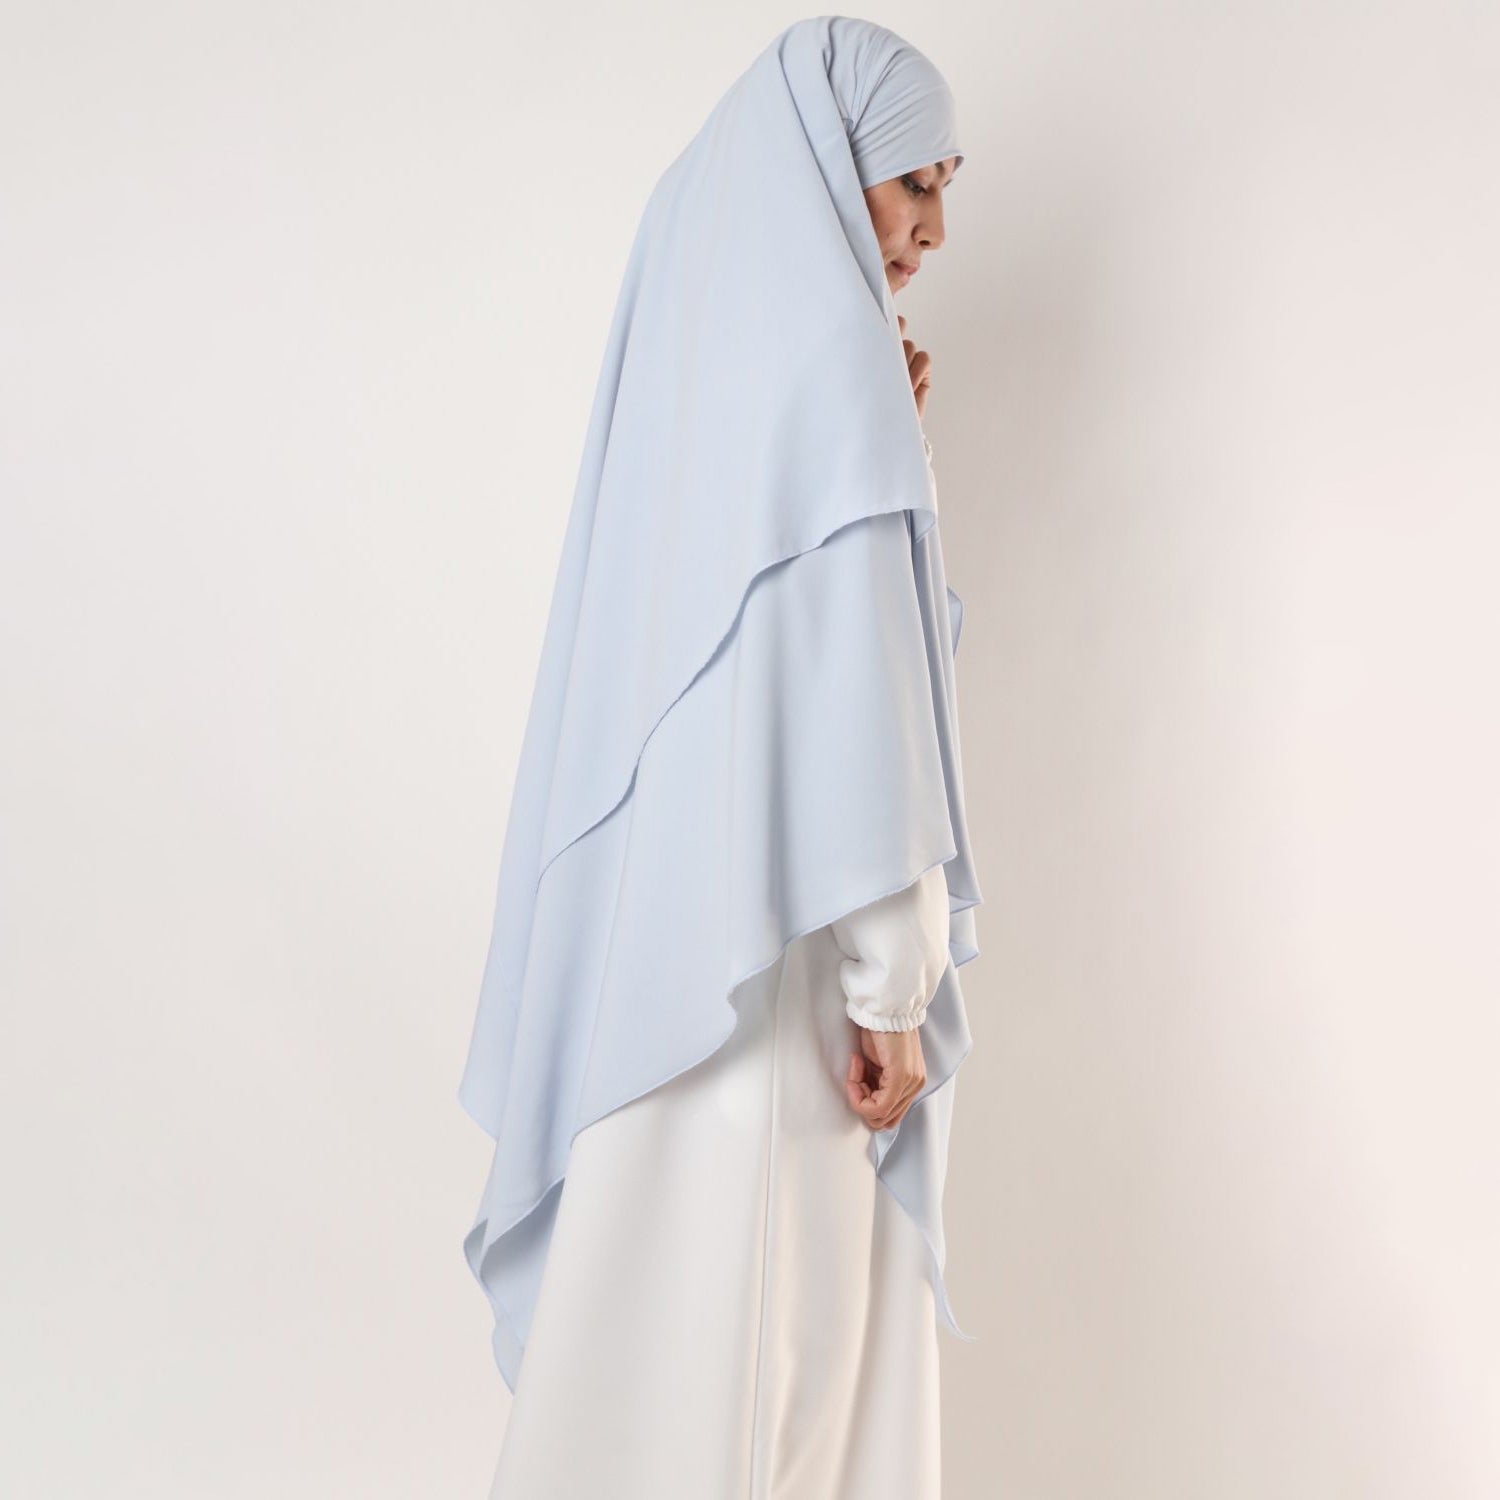 Khimar : 2 Layer Triangular Diamond Instant Khimar-Hijab-Jilbab for Girls & Women in Light Green Color | Tie Back Burkha Jilbab Khimar Style Abaya Hijab Niqab Islamic Wear